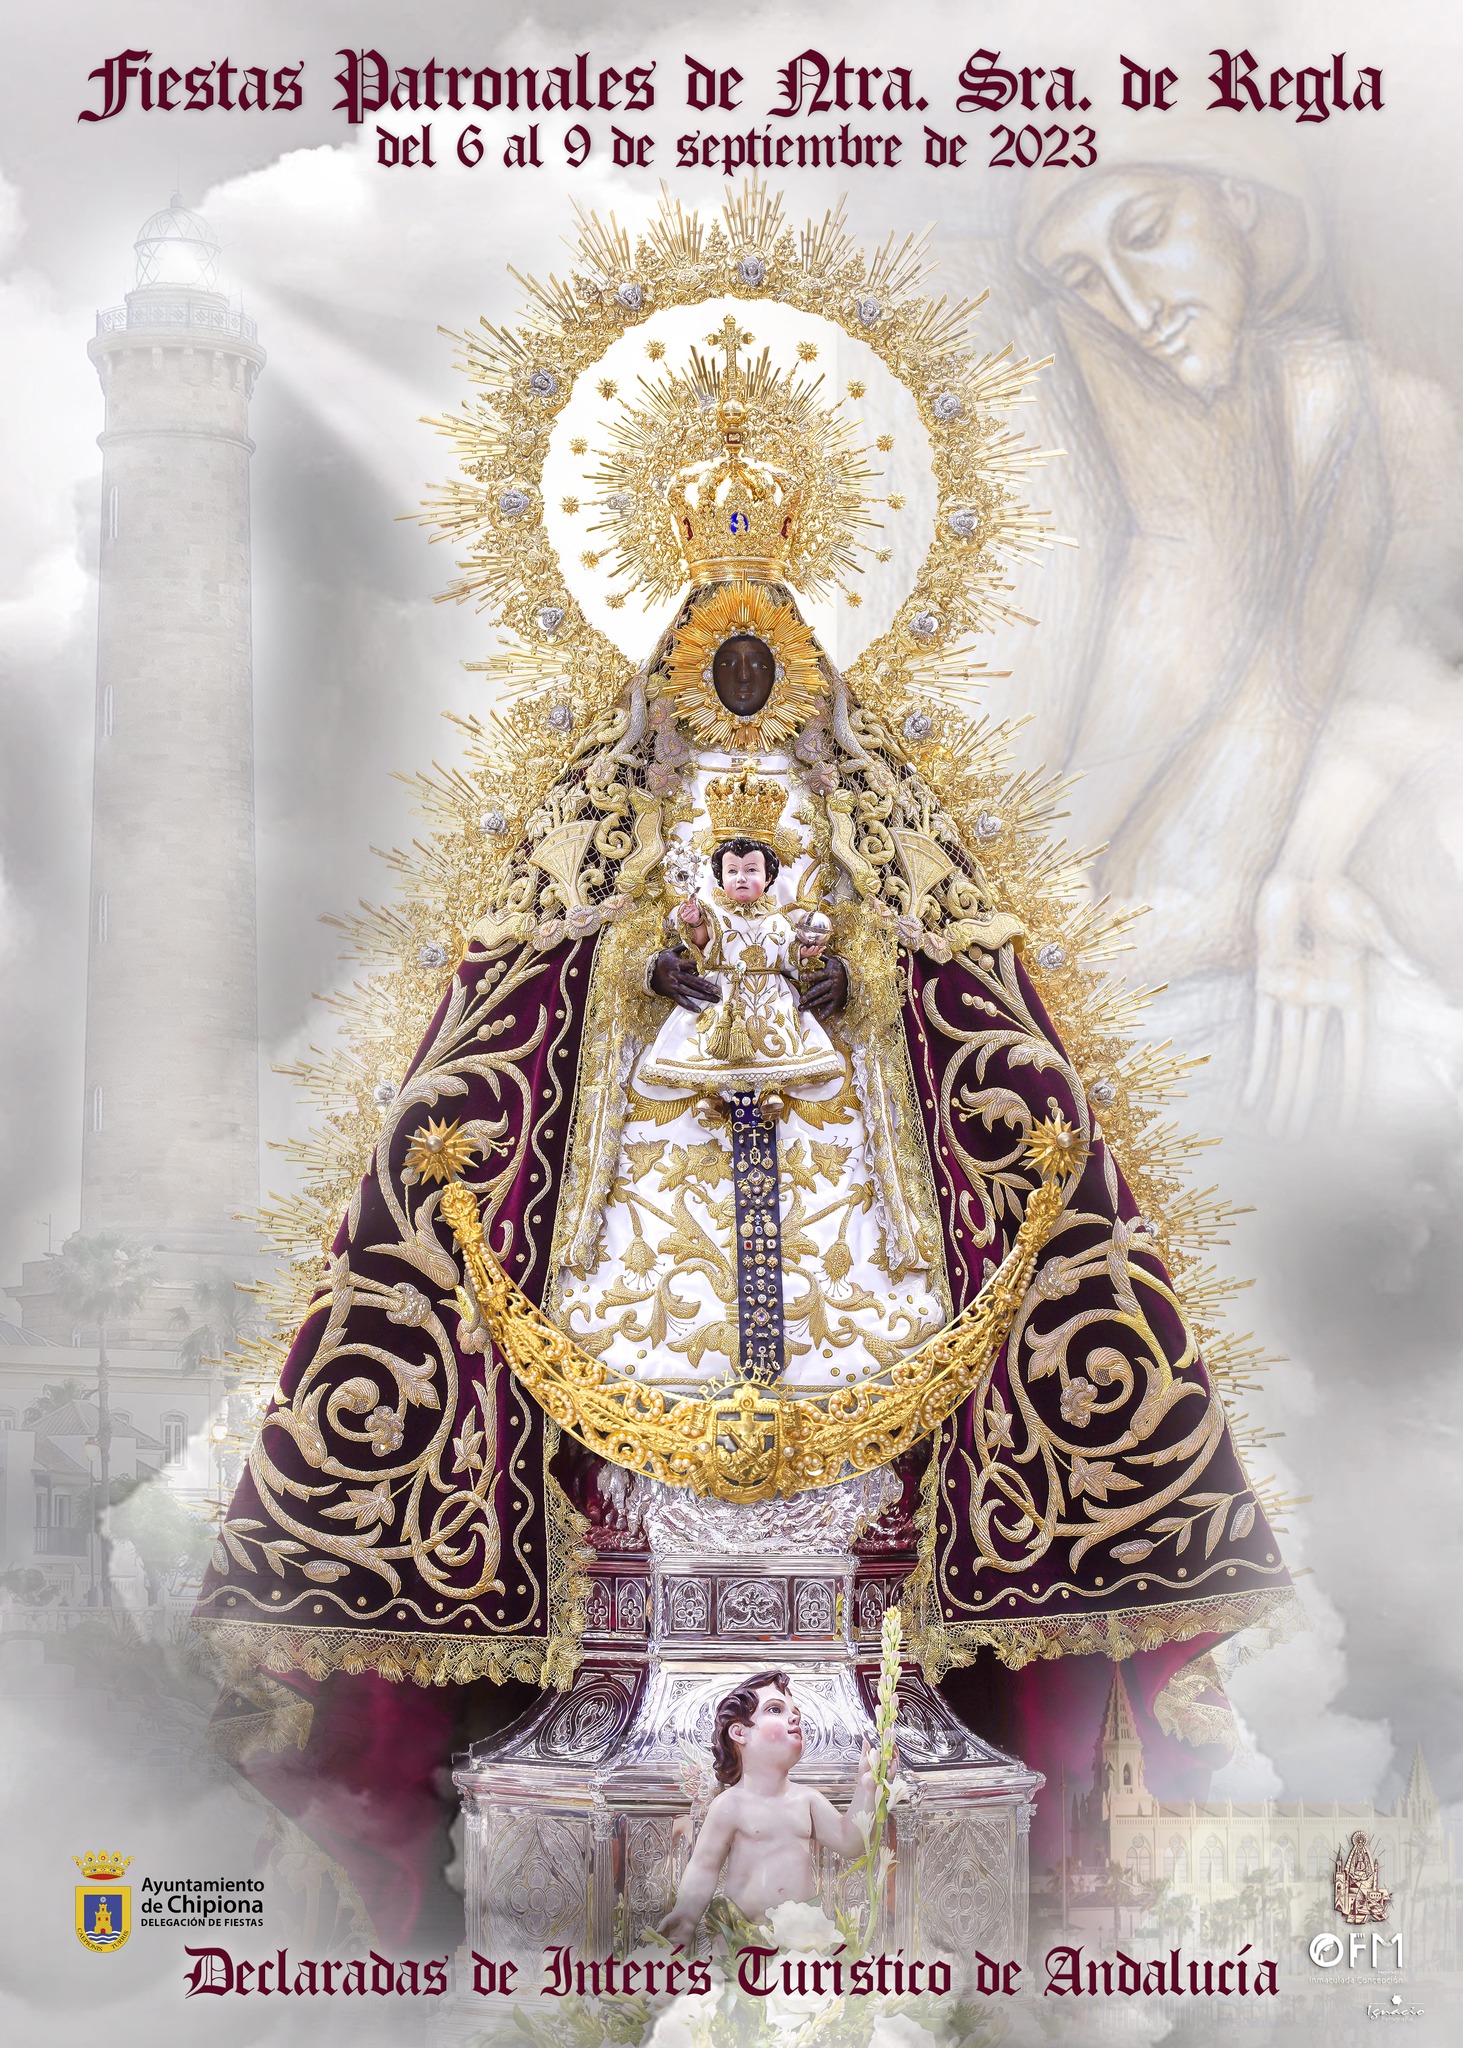 Festivities in honour of the patron saint of Nuestra Señora de Regla